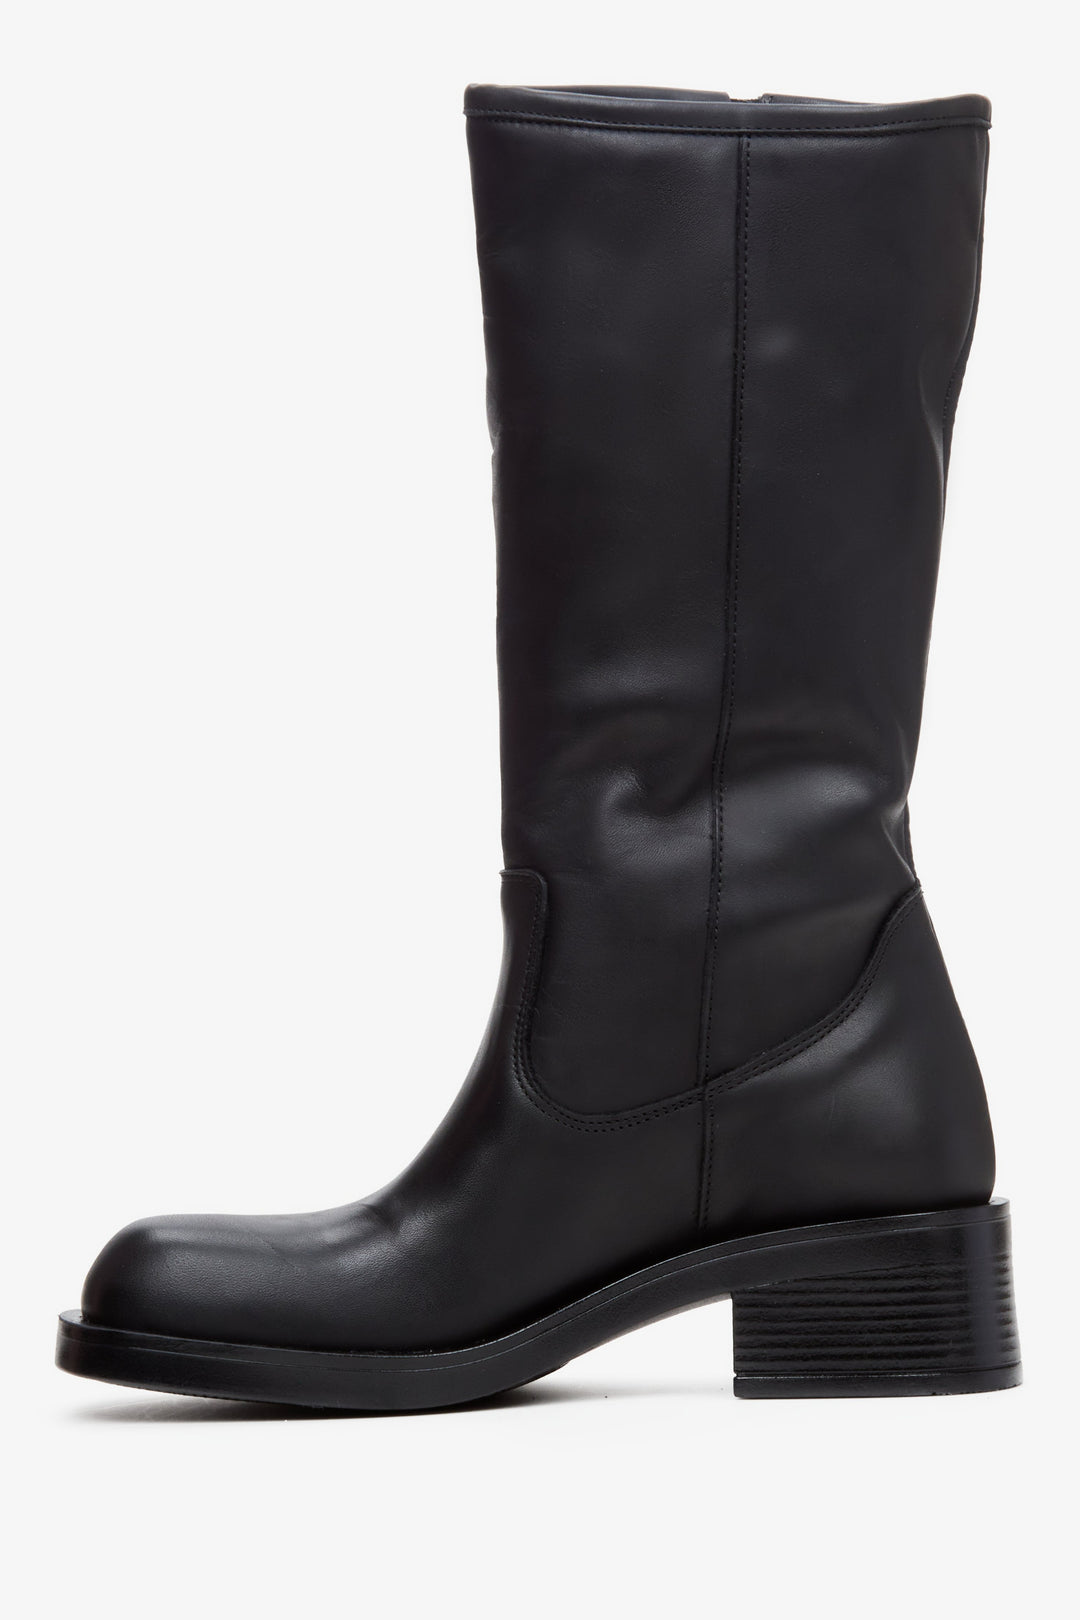 Women's black leather ankle boots by Estro - shoe profile.